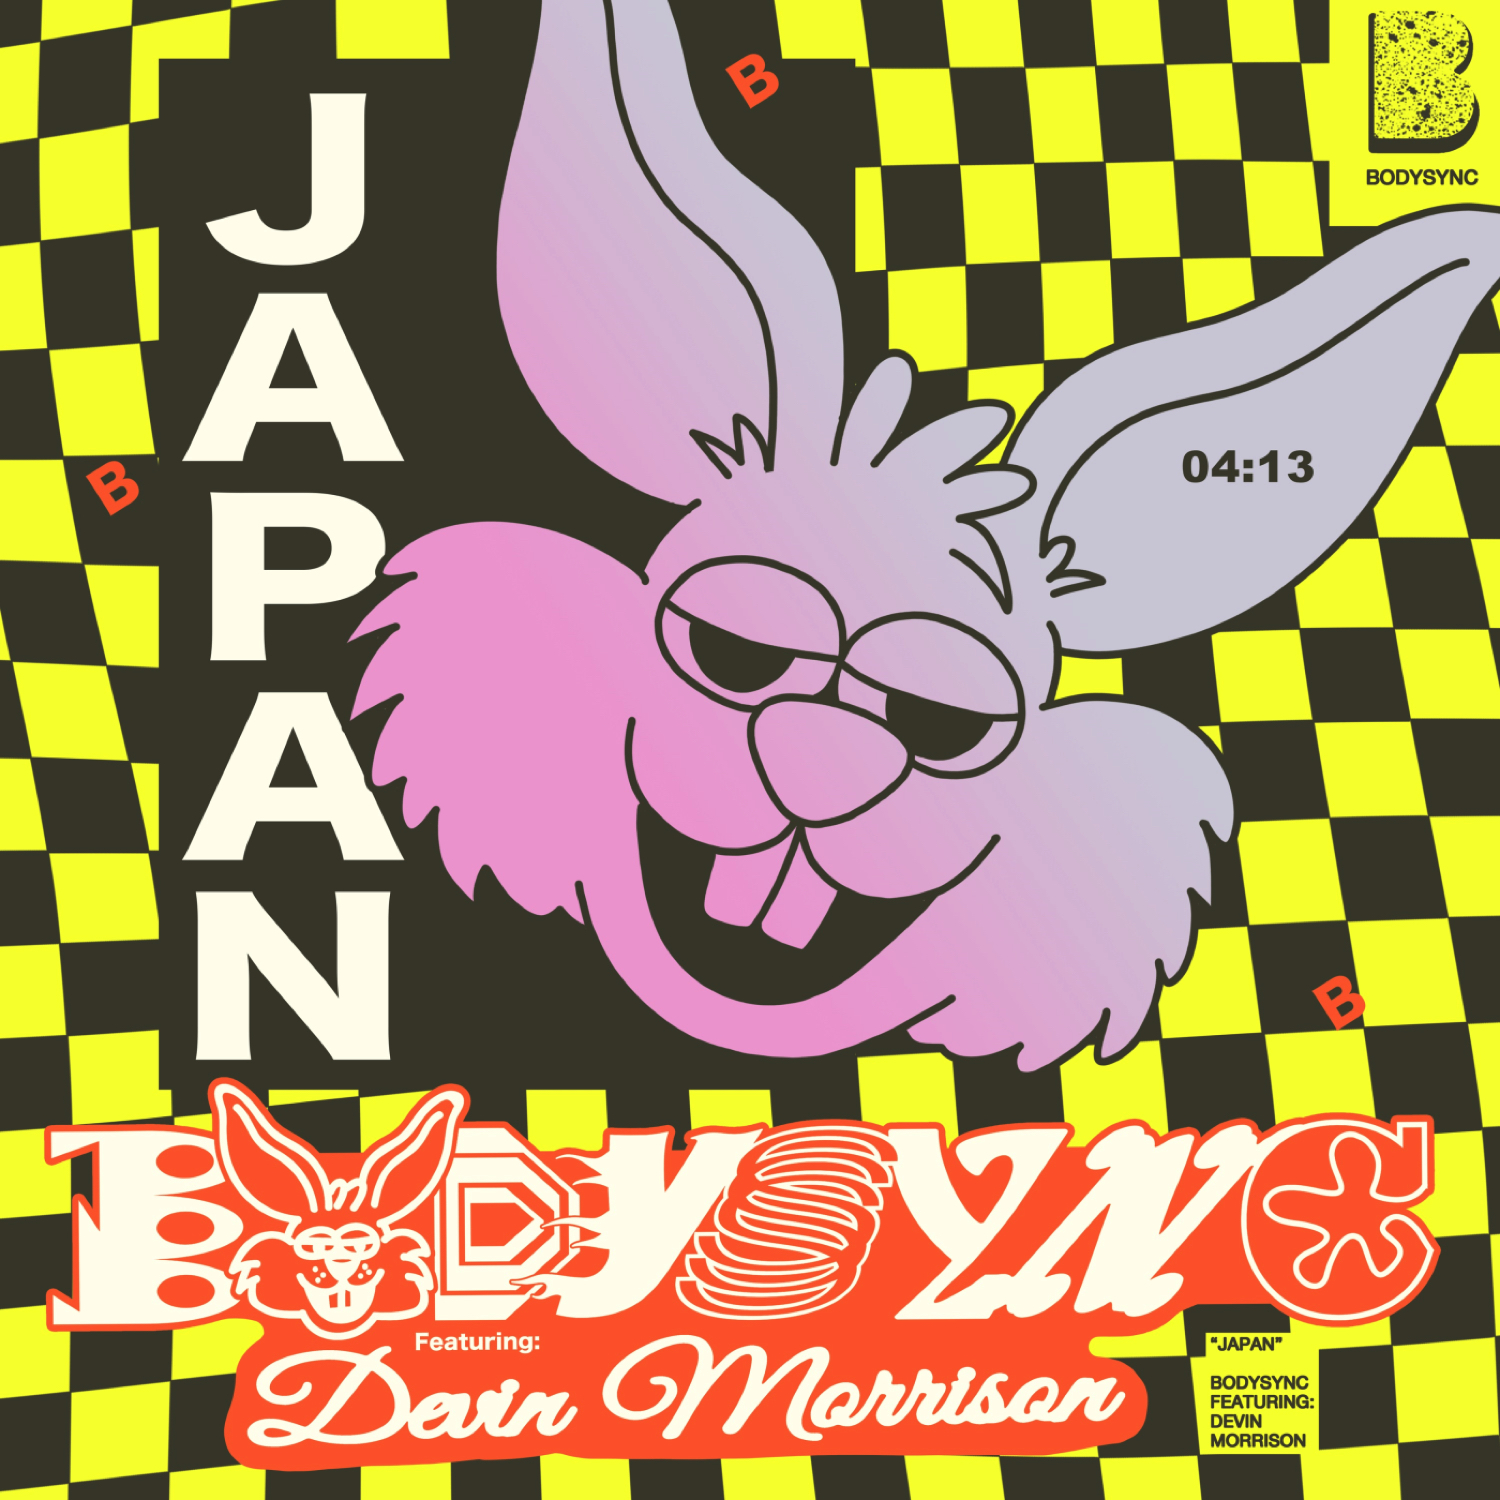 Bodysync featuring Devin Morrison — Japan cover artwork